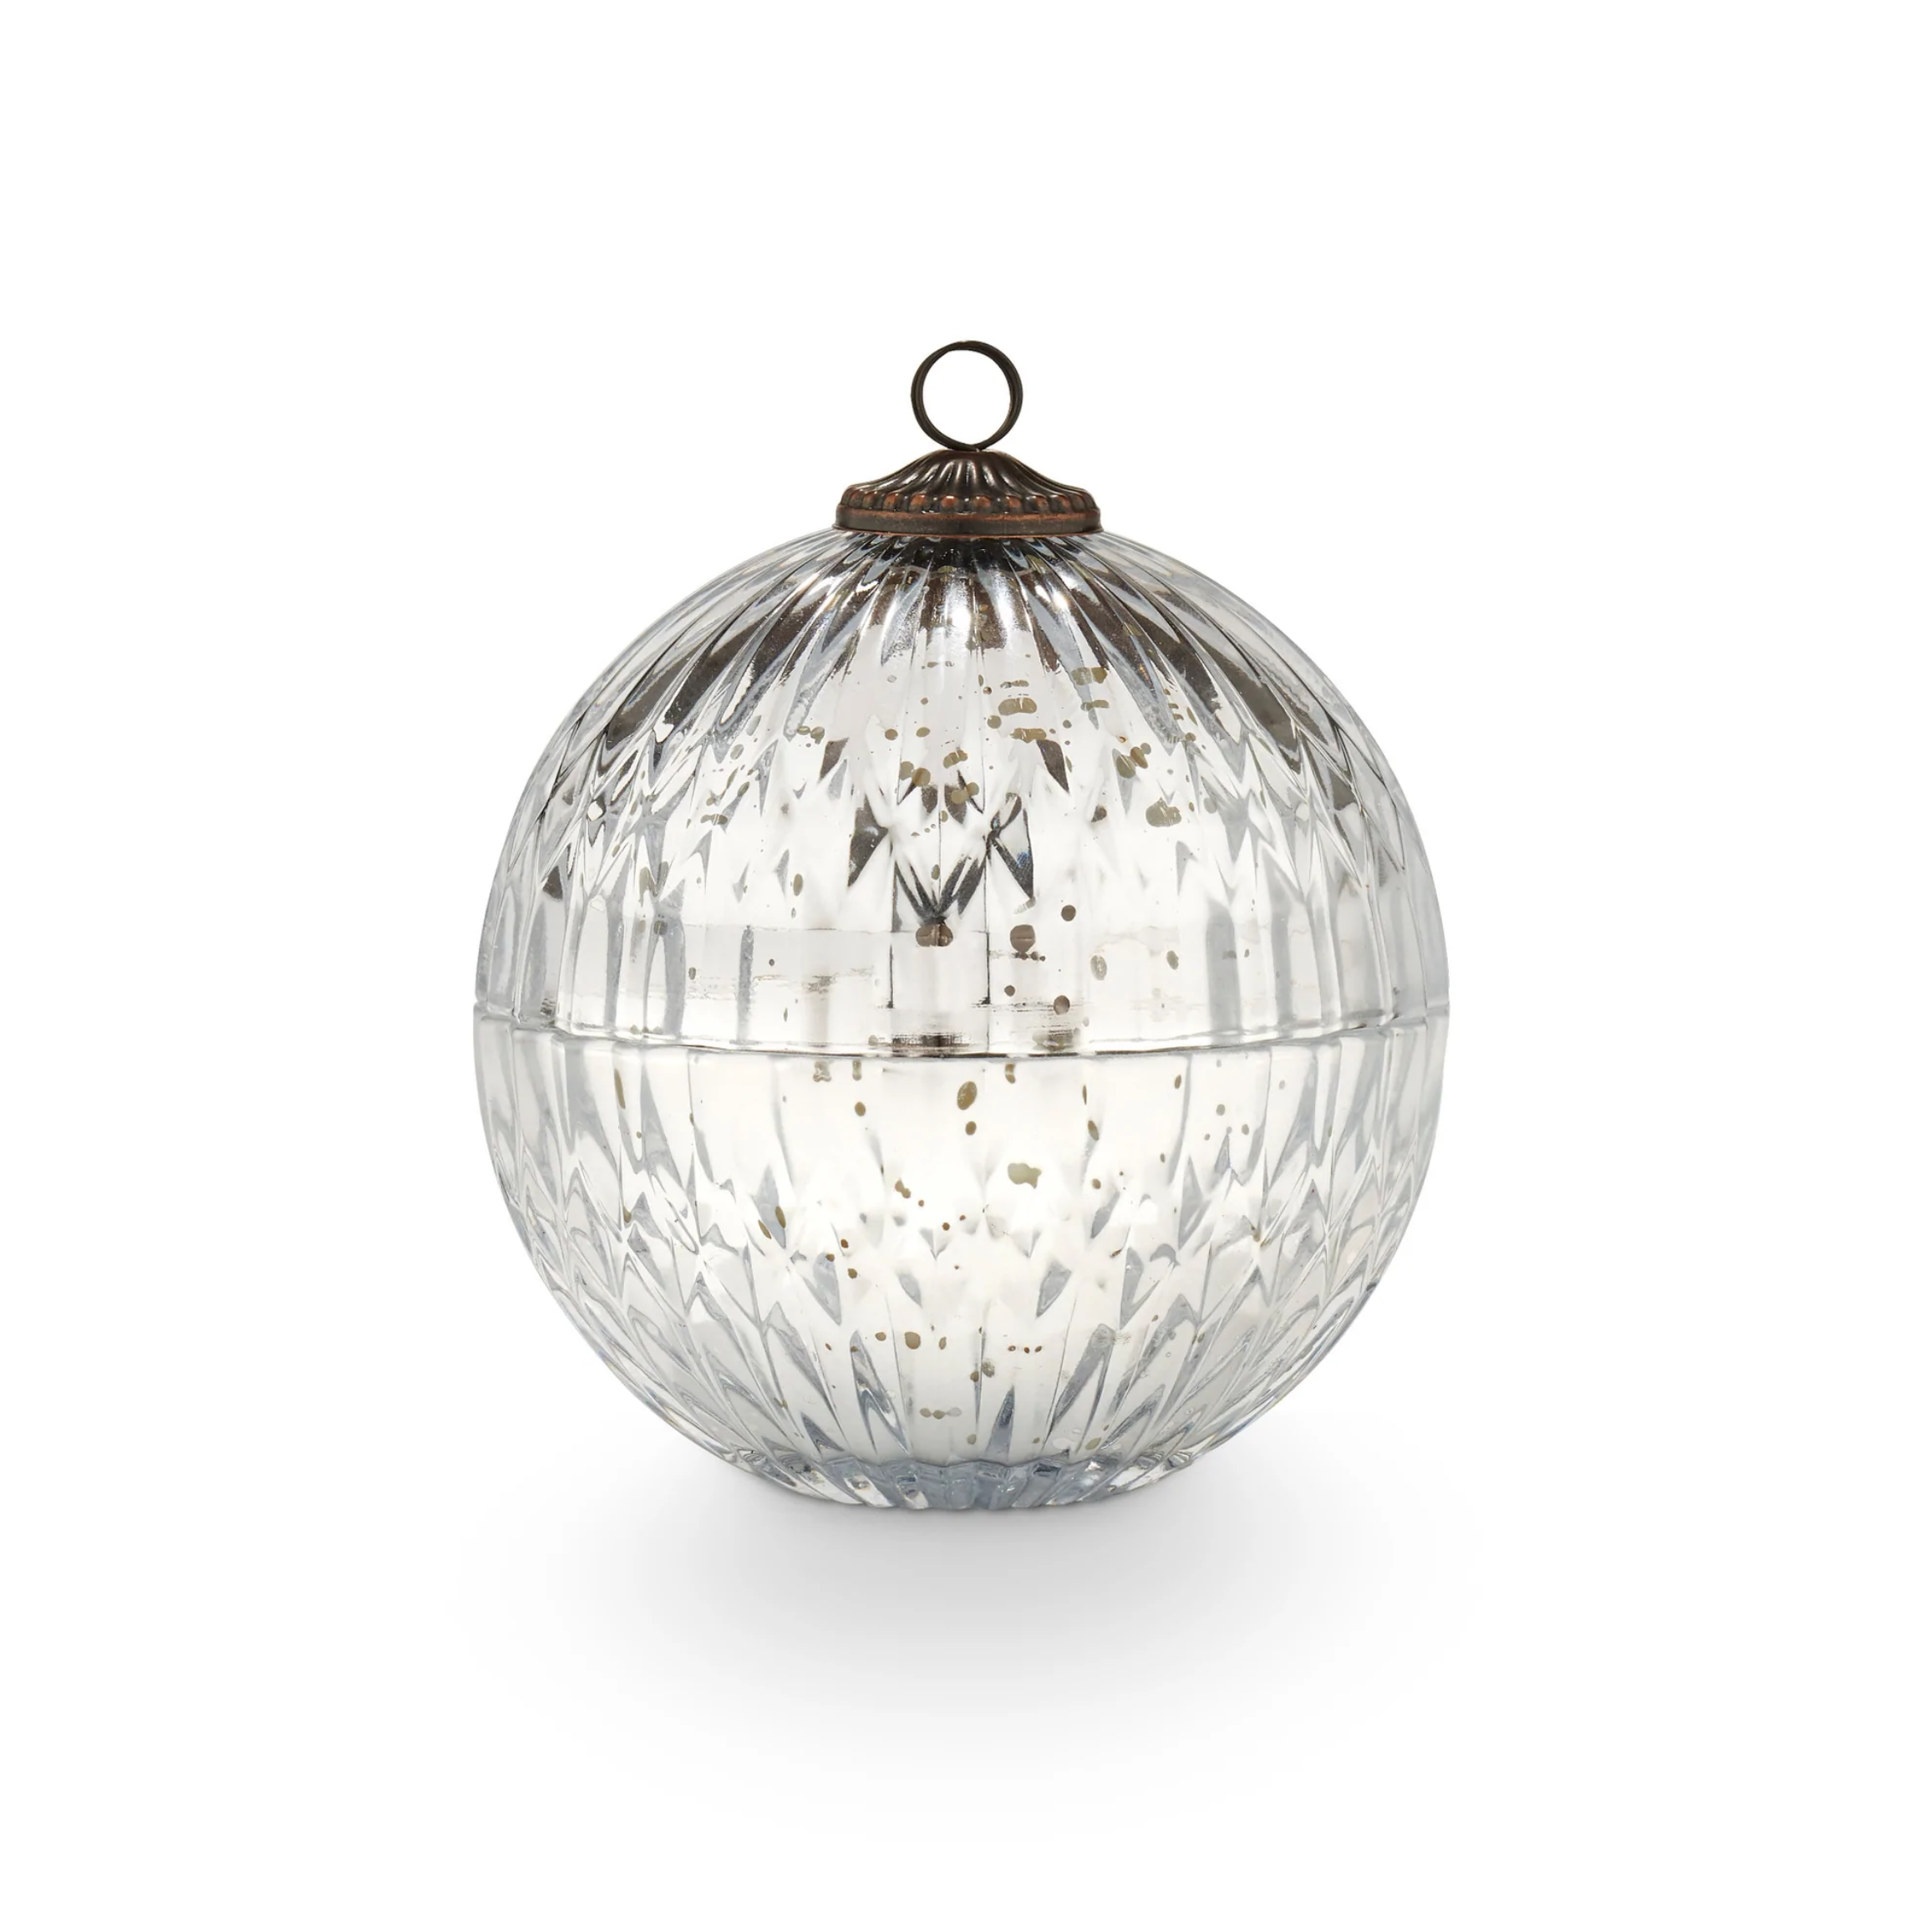 Mercury Ornament - BALSAM & CEDAR ShopatGrace.com